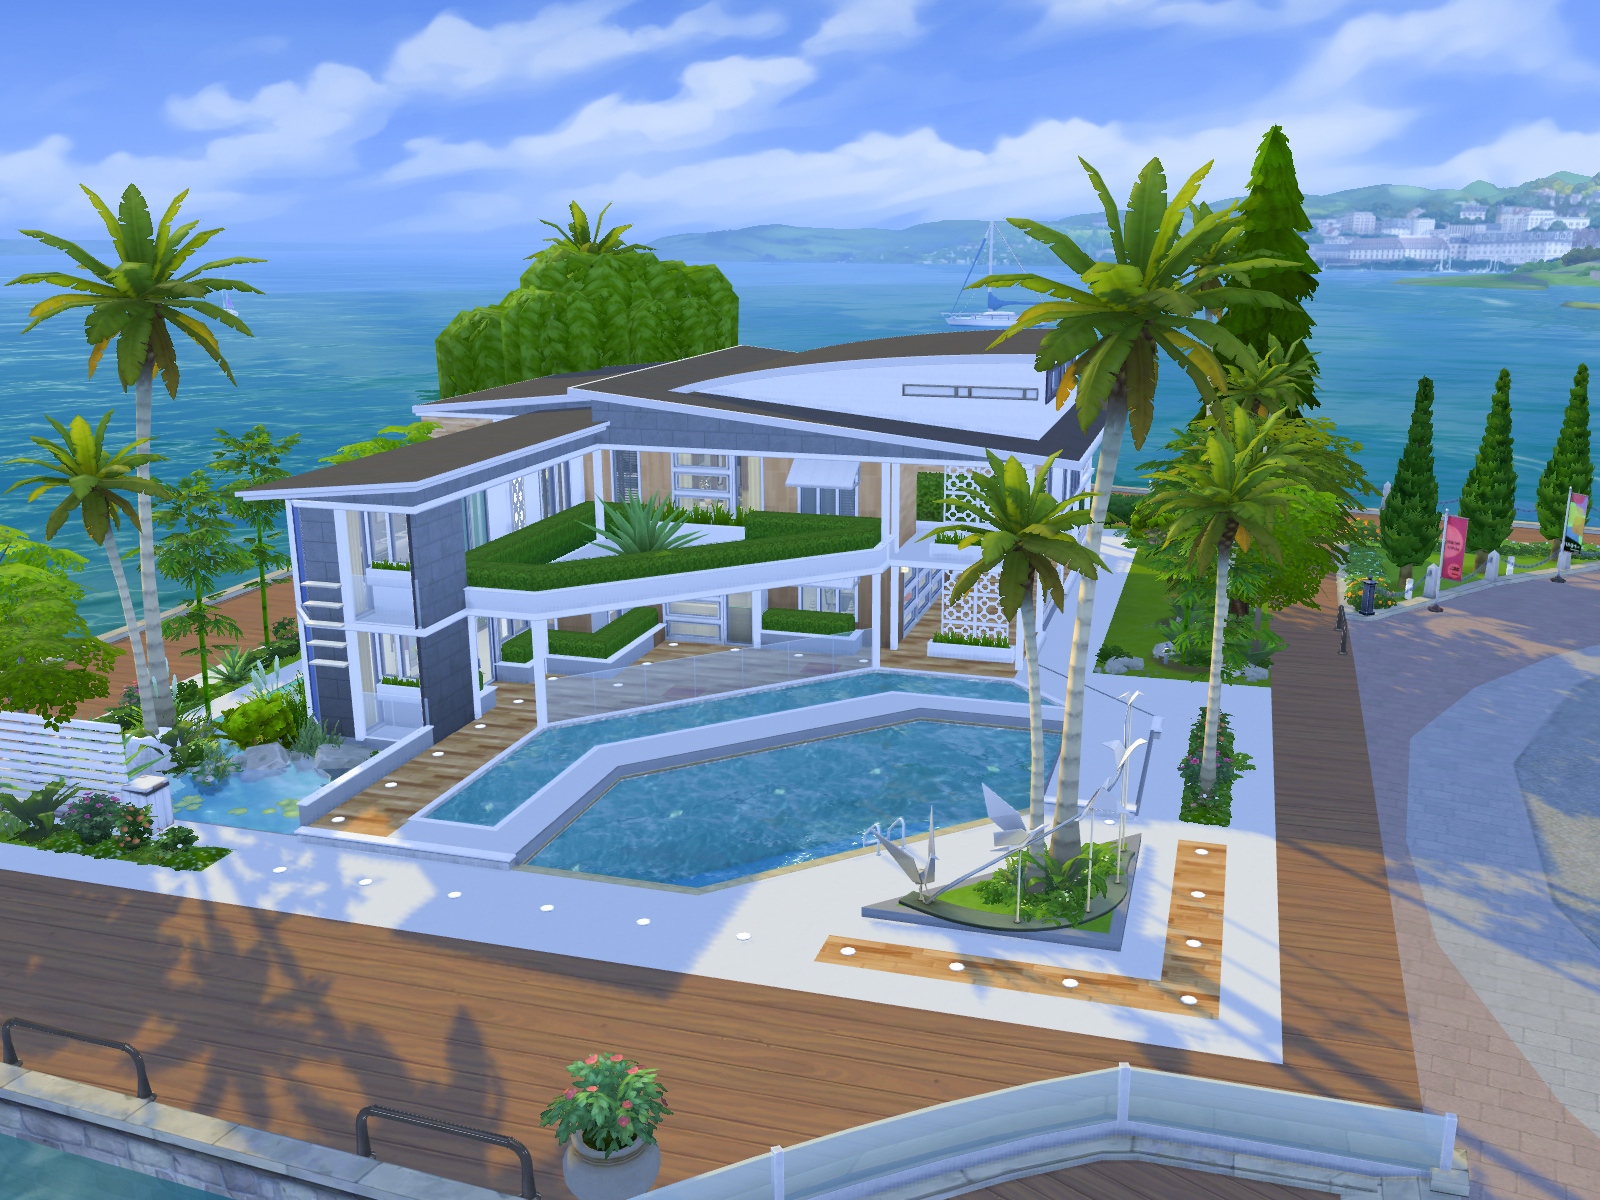 Jak Sciagnac Dom Do The Sims 4 Картинки Домов В Симс 4 – Telegraph